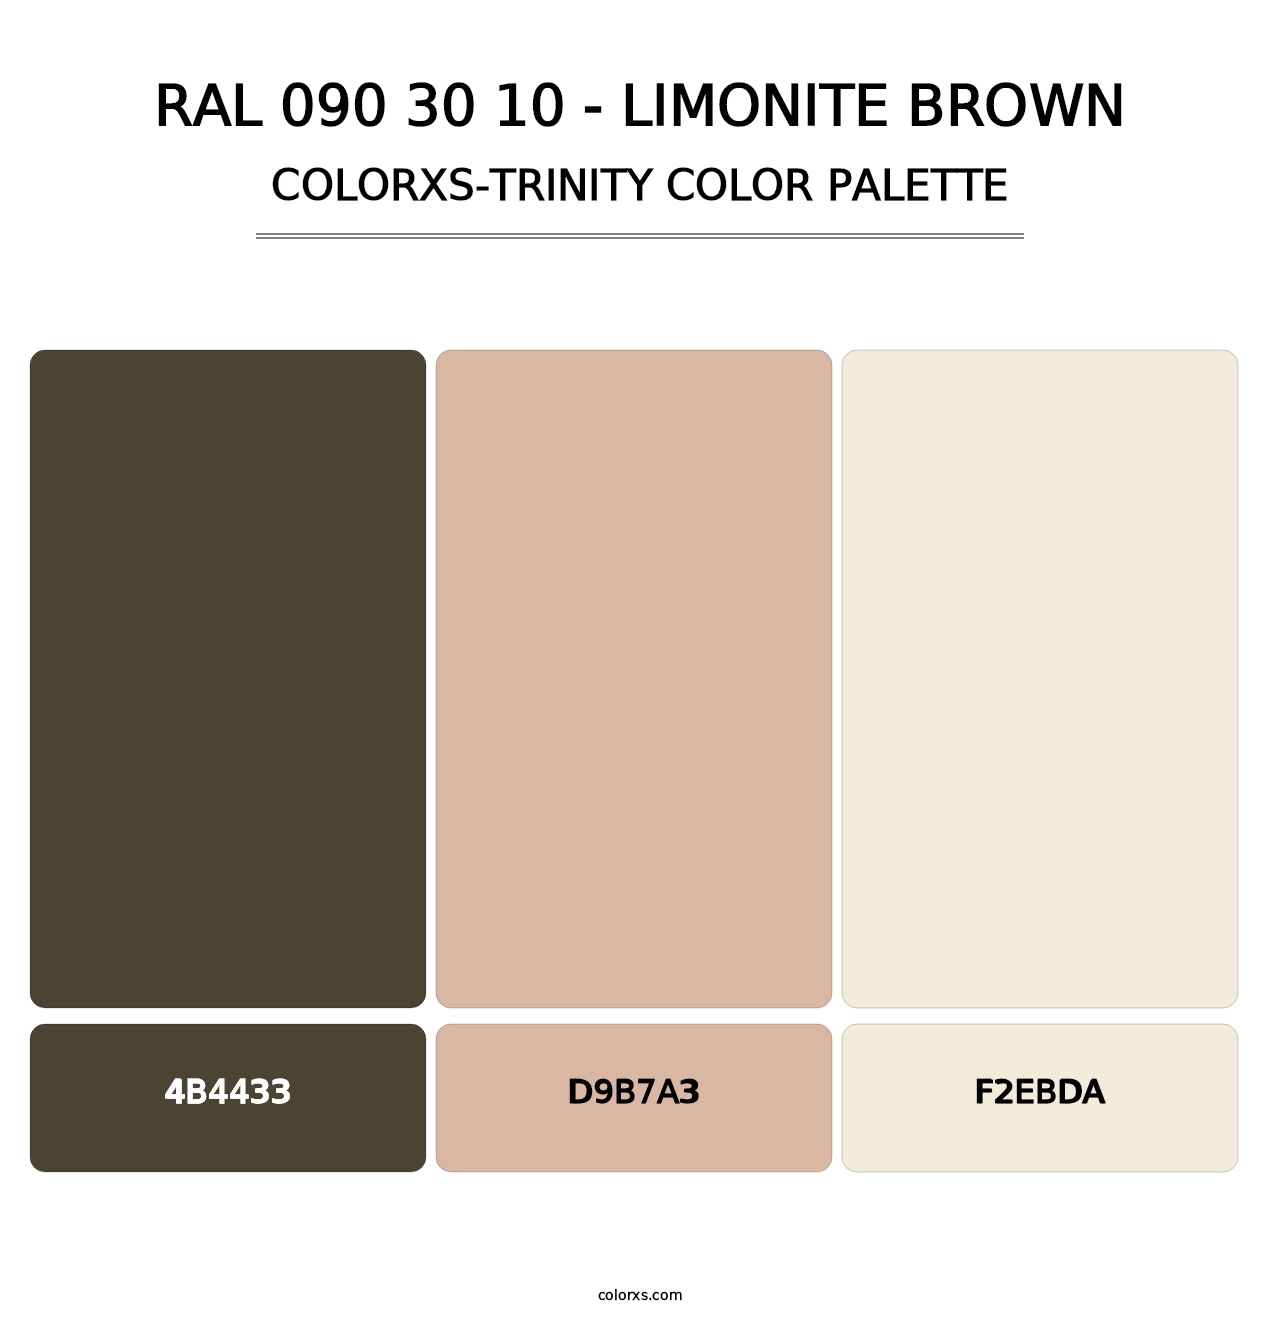 RAL 090 30 10 - Limonite Brown - Colorxs Trinity Palette